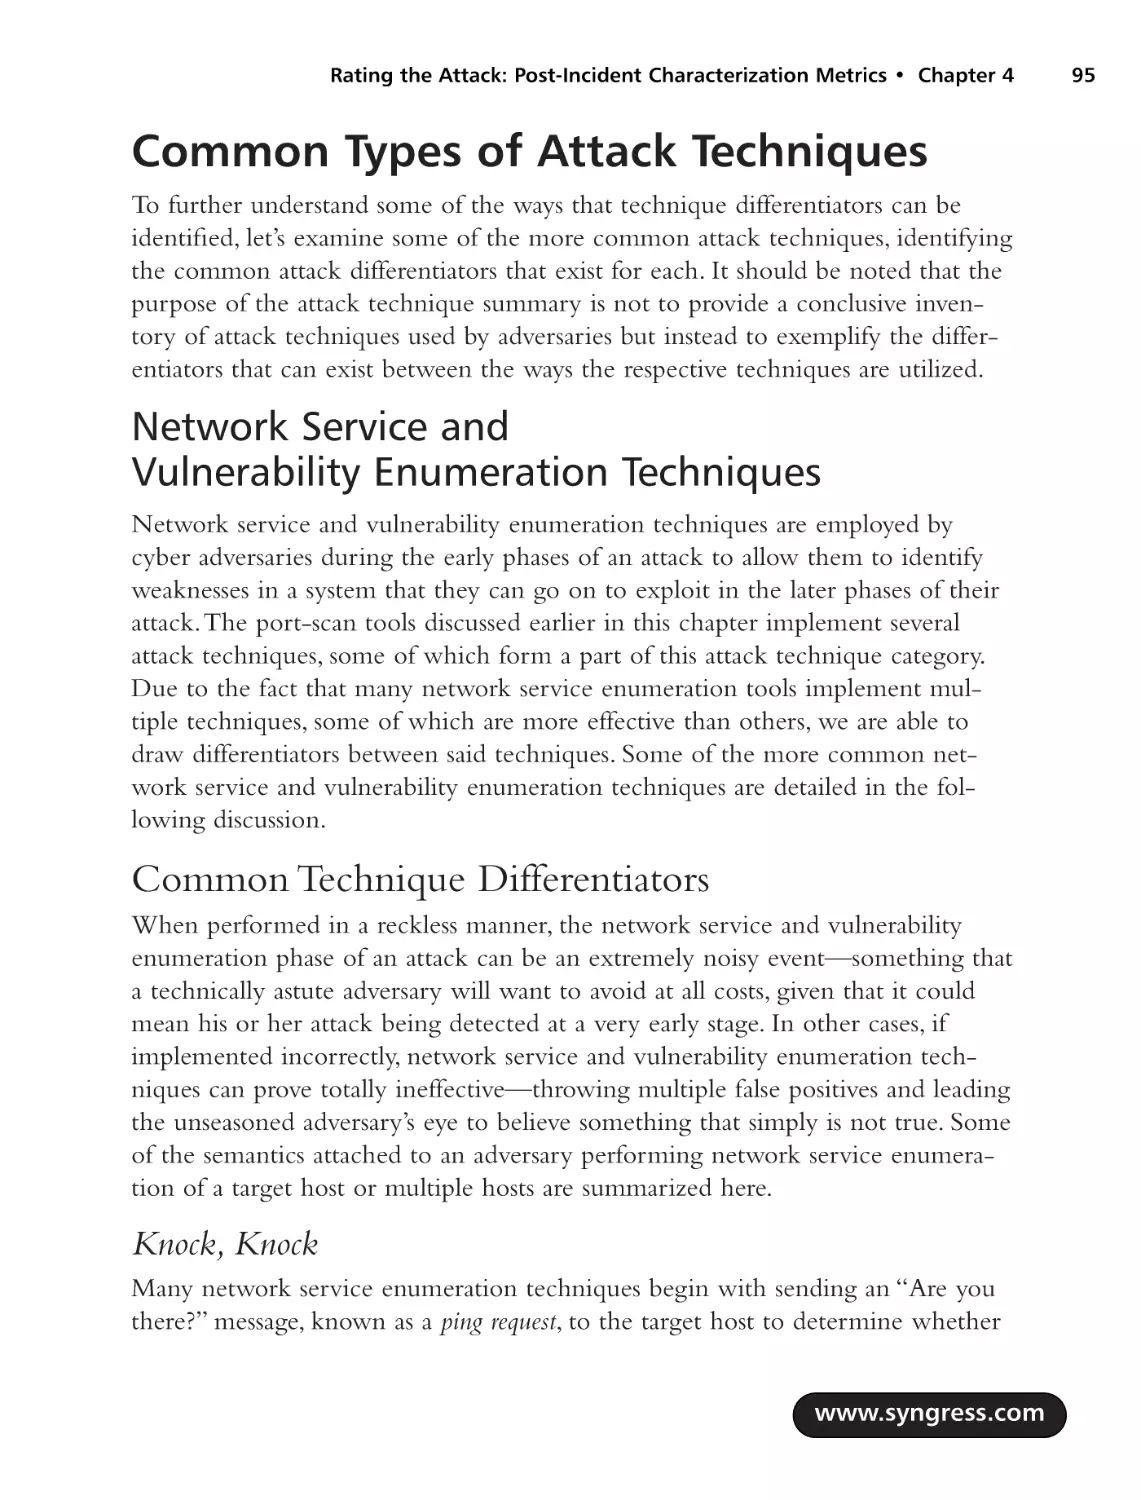 Common Types of Attack Techniques
Network Service and Vulnerability Enumeration Techniques
Common Technique Differentiators